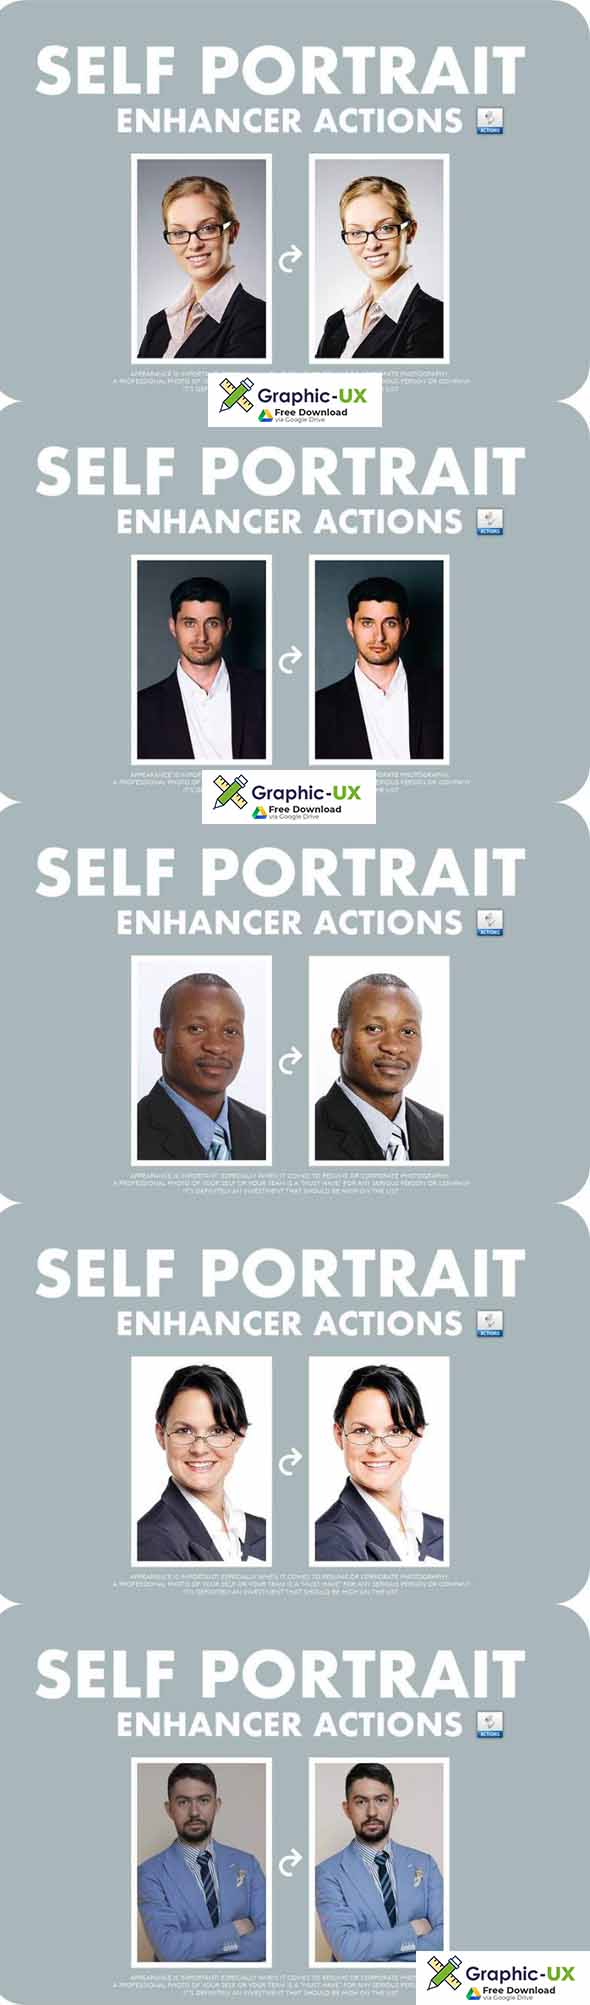 Self Portrait Enhancer Action free